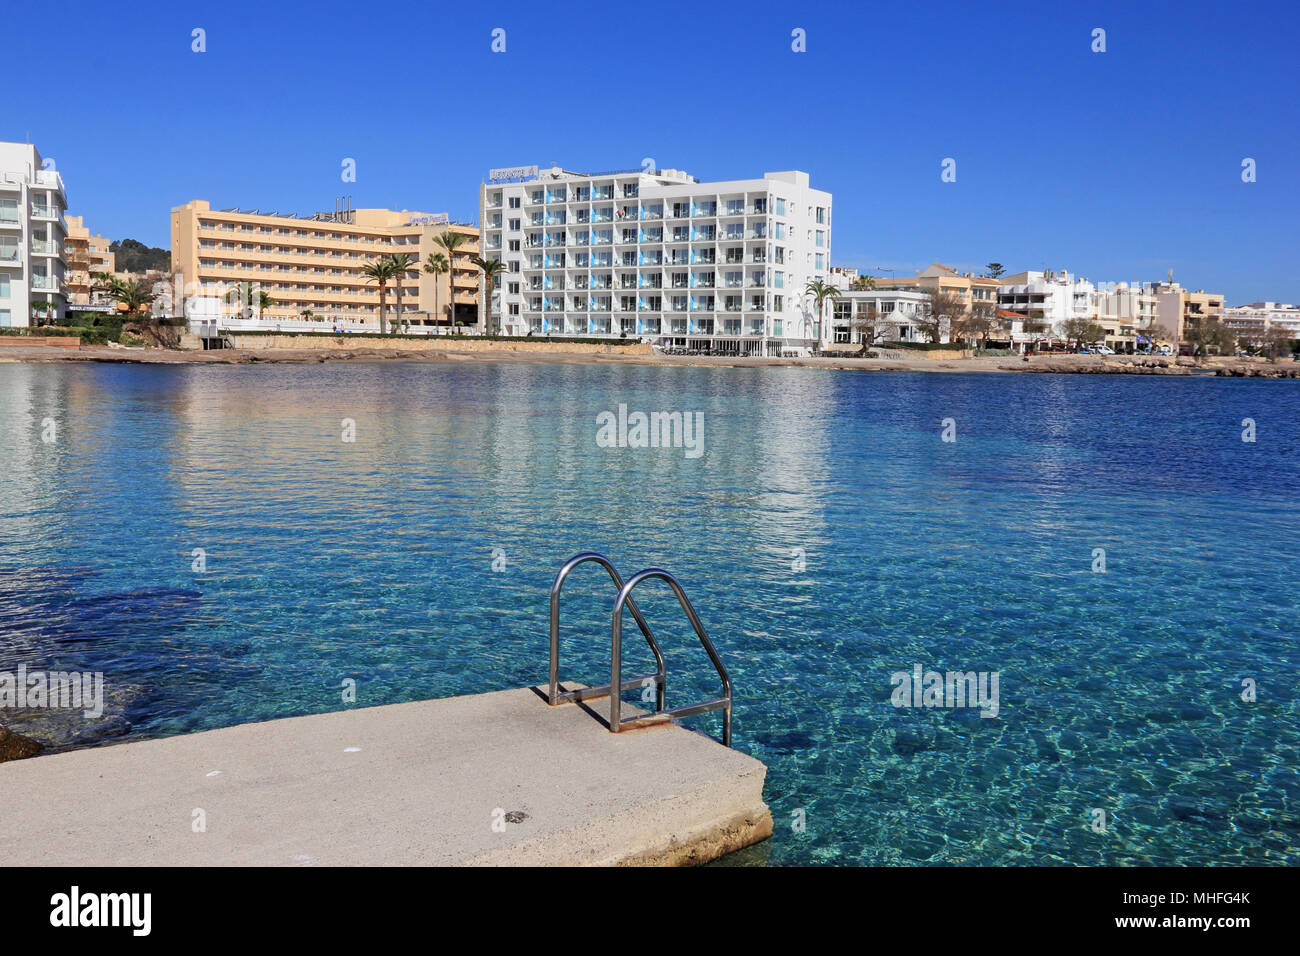 Hotels Levante and Levante Park, Cala Bona, Mallorca Stock Photo